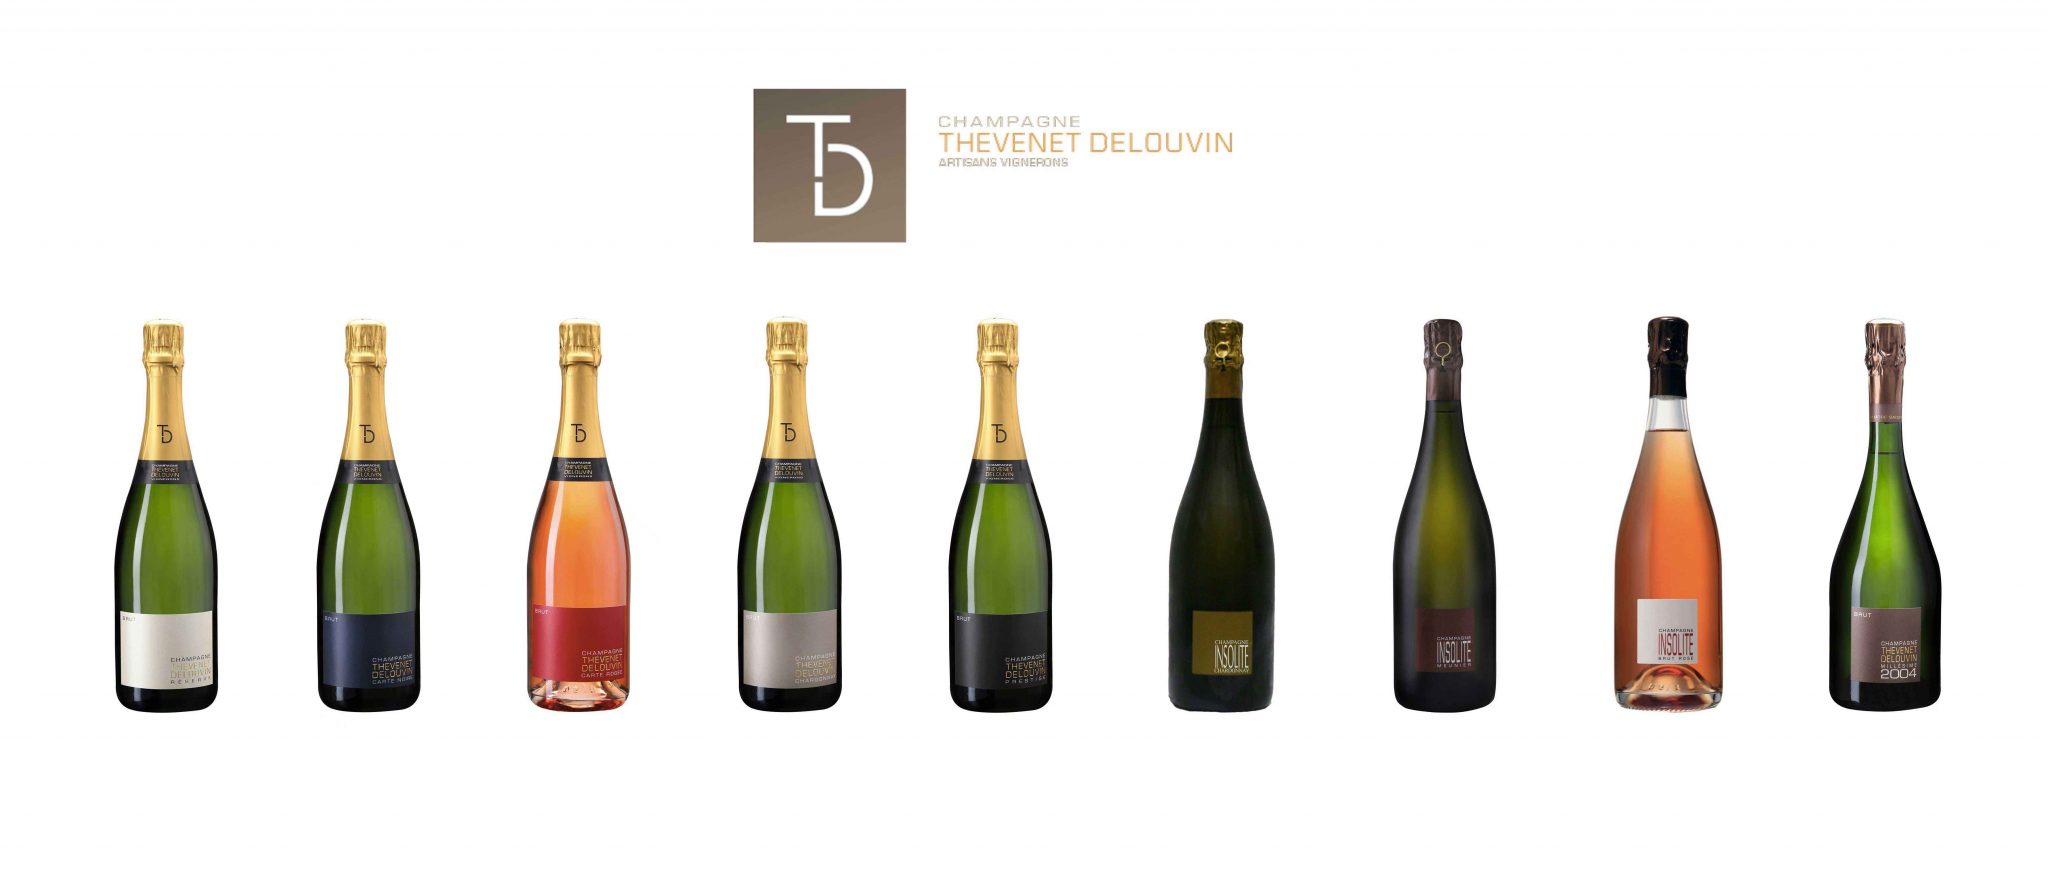 Champagne Thévenet-Delouvin